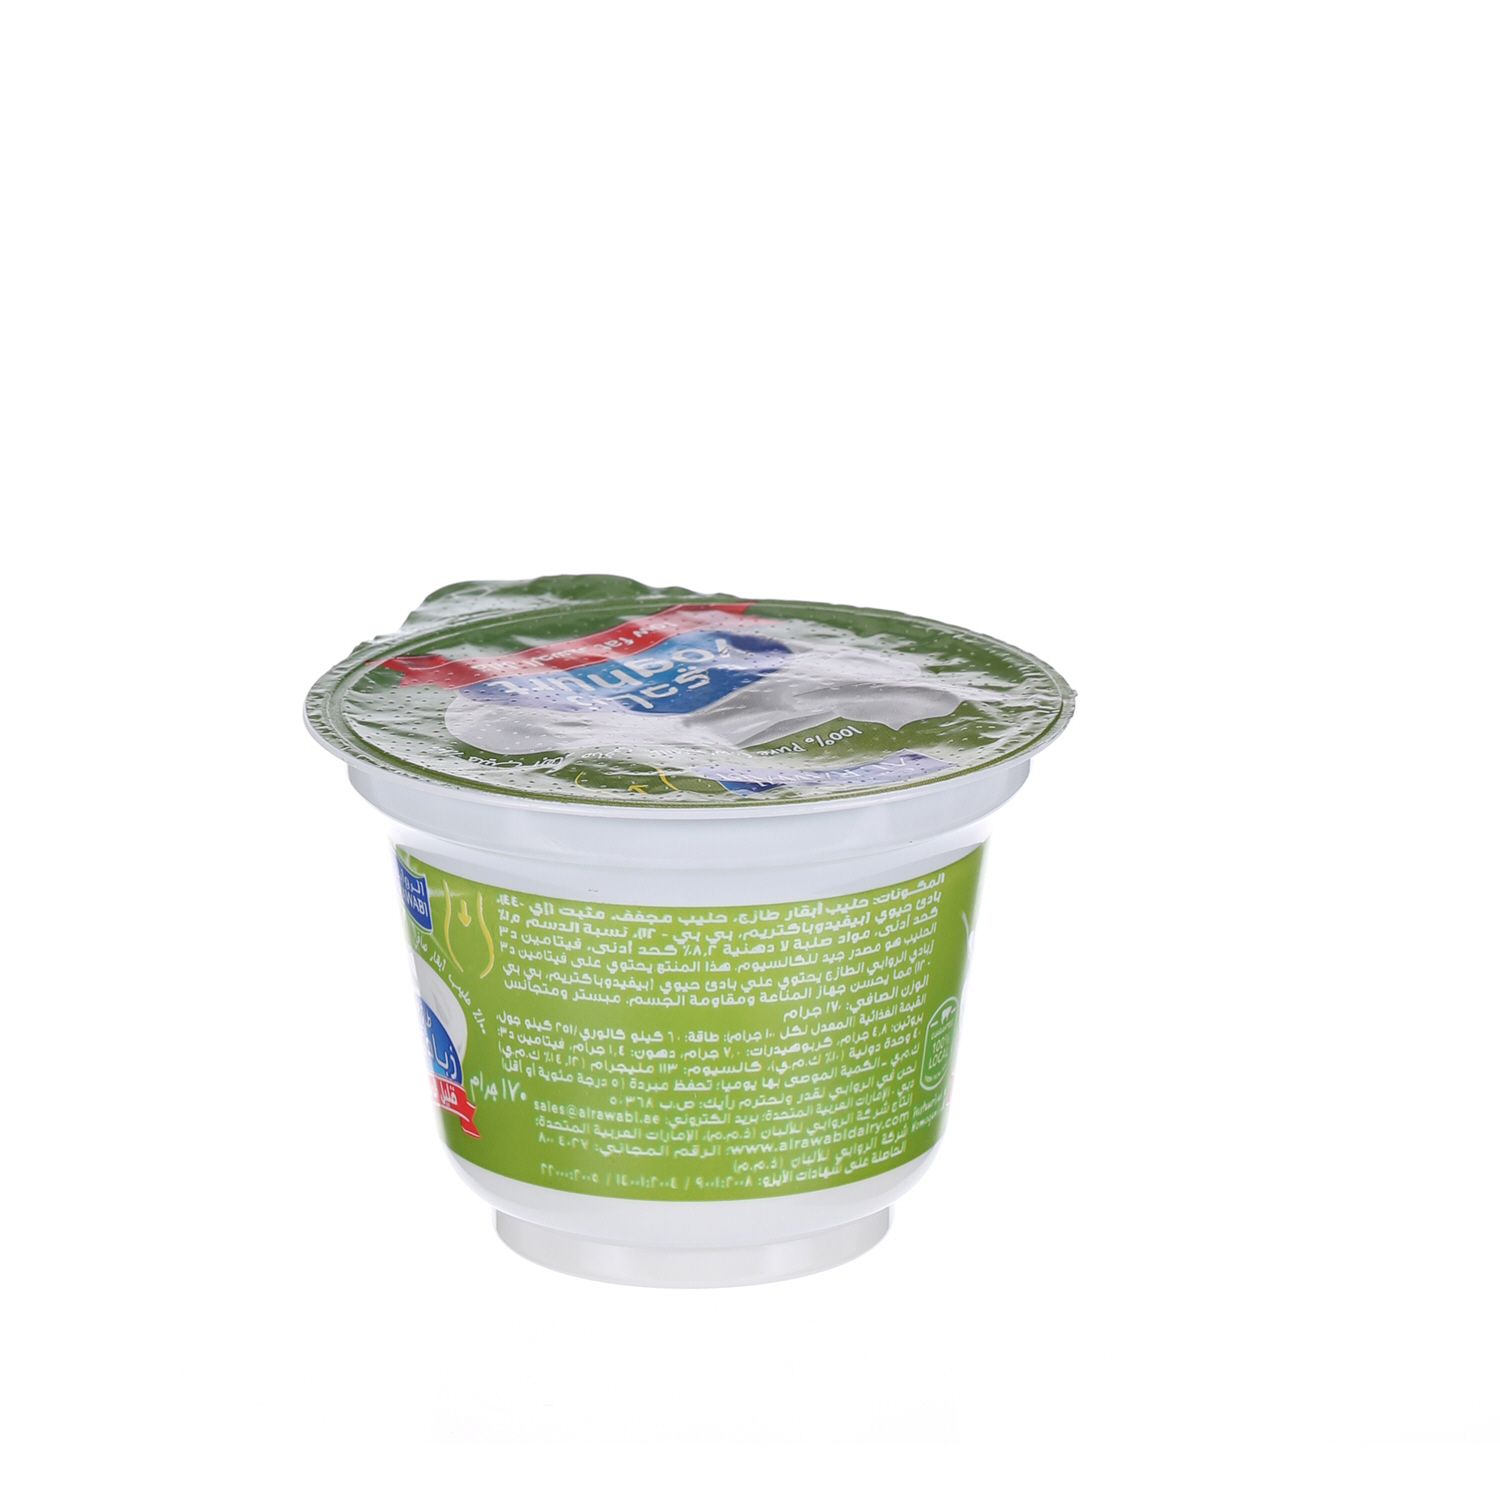 Al Rawabi Fresh Yoghurt Low Fat 170gm